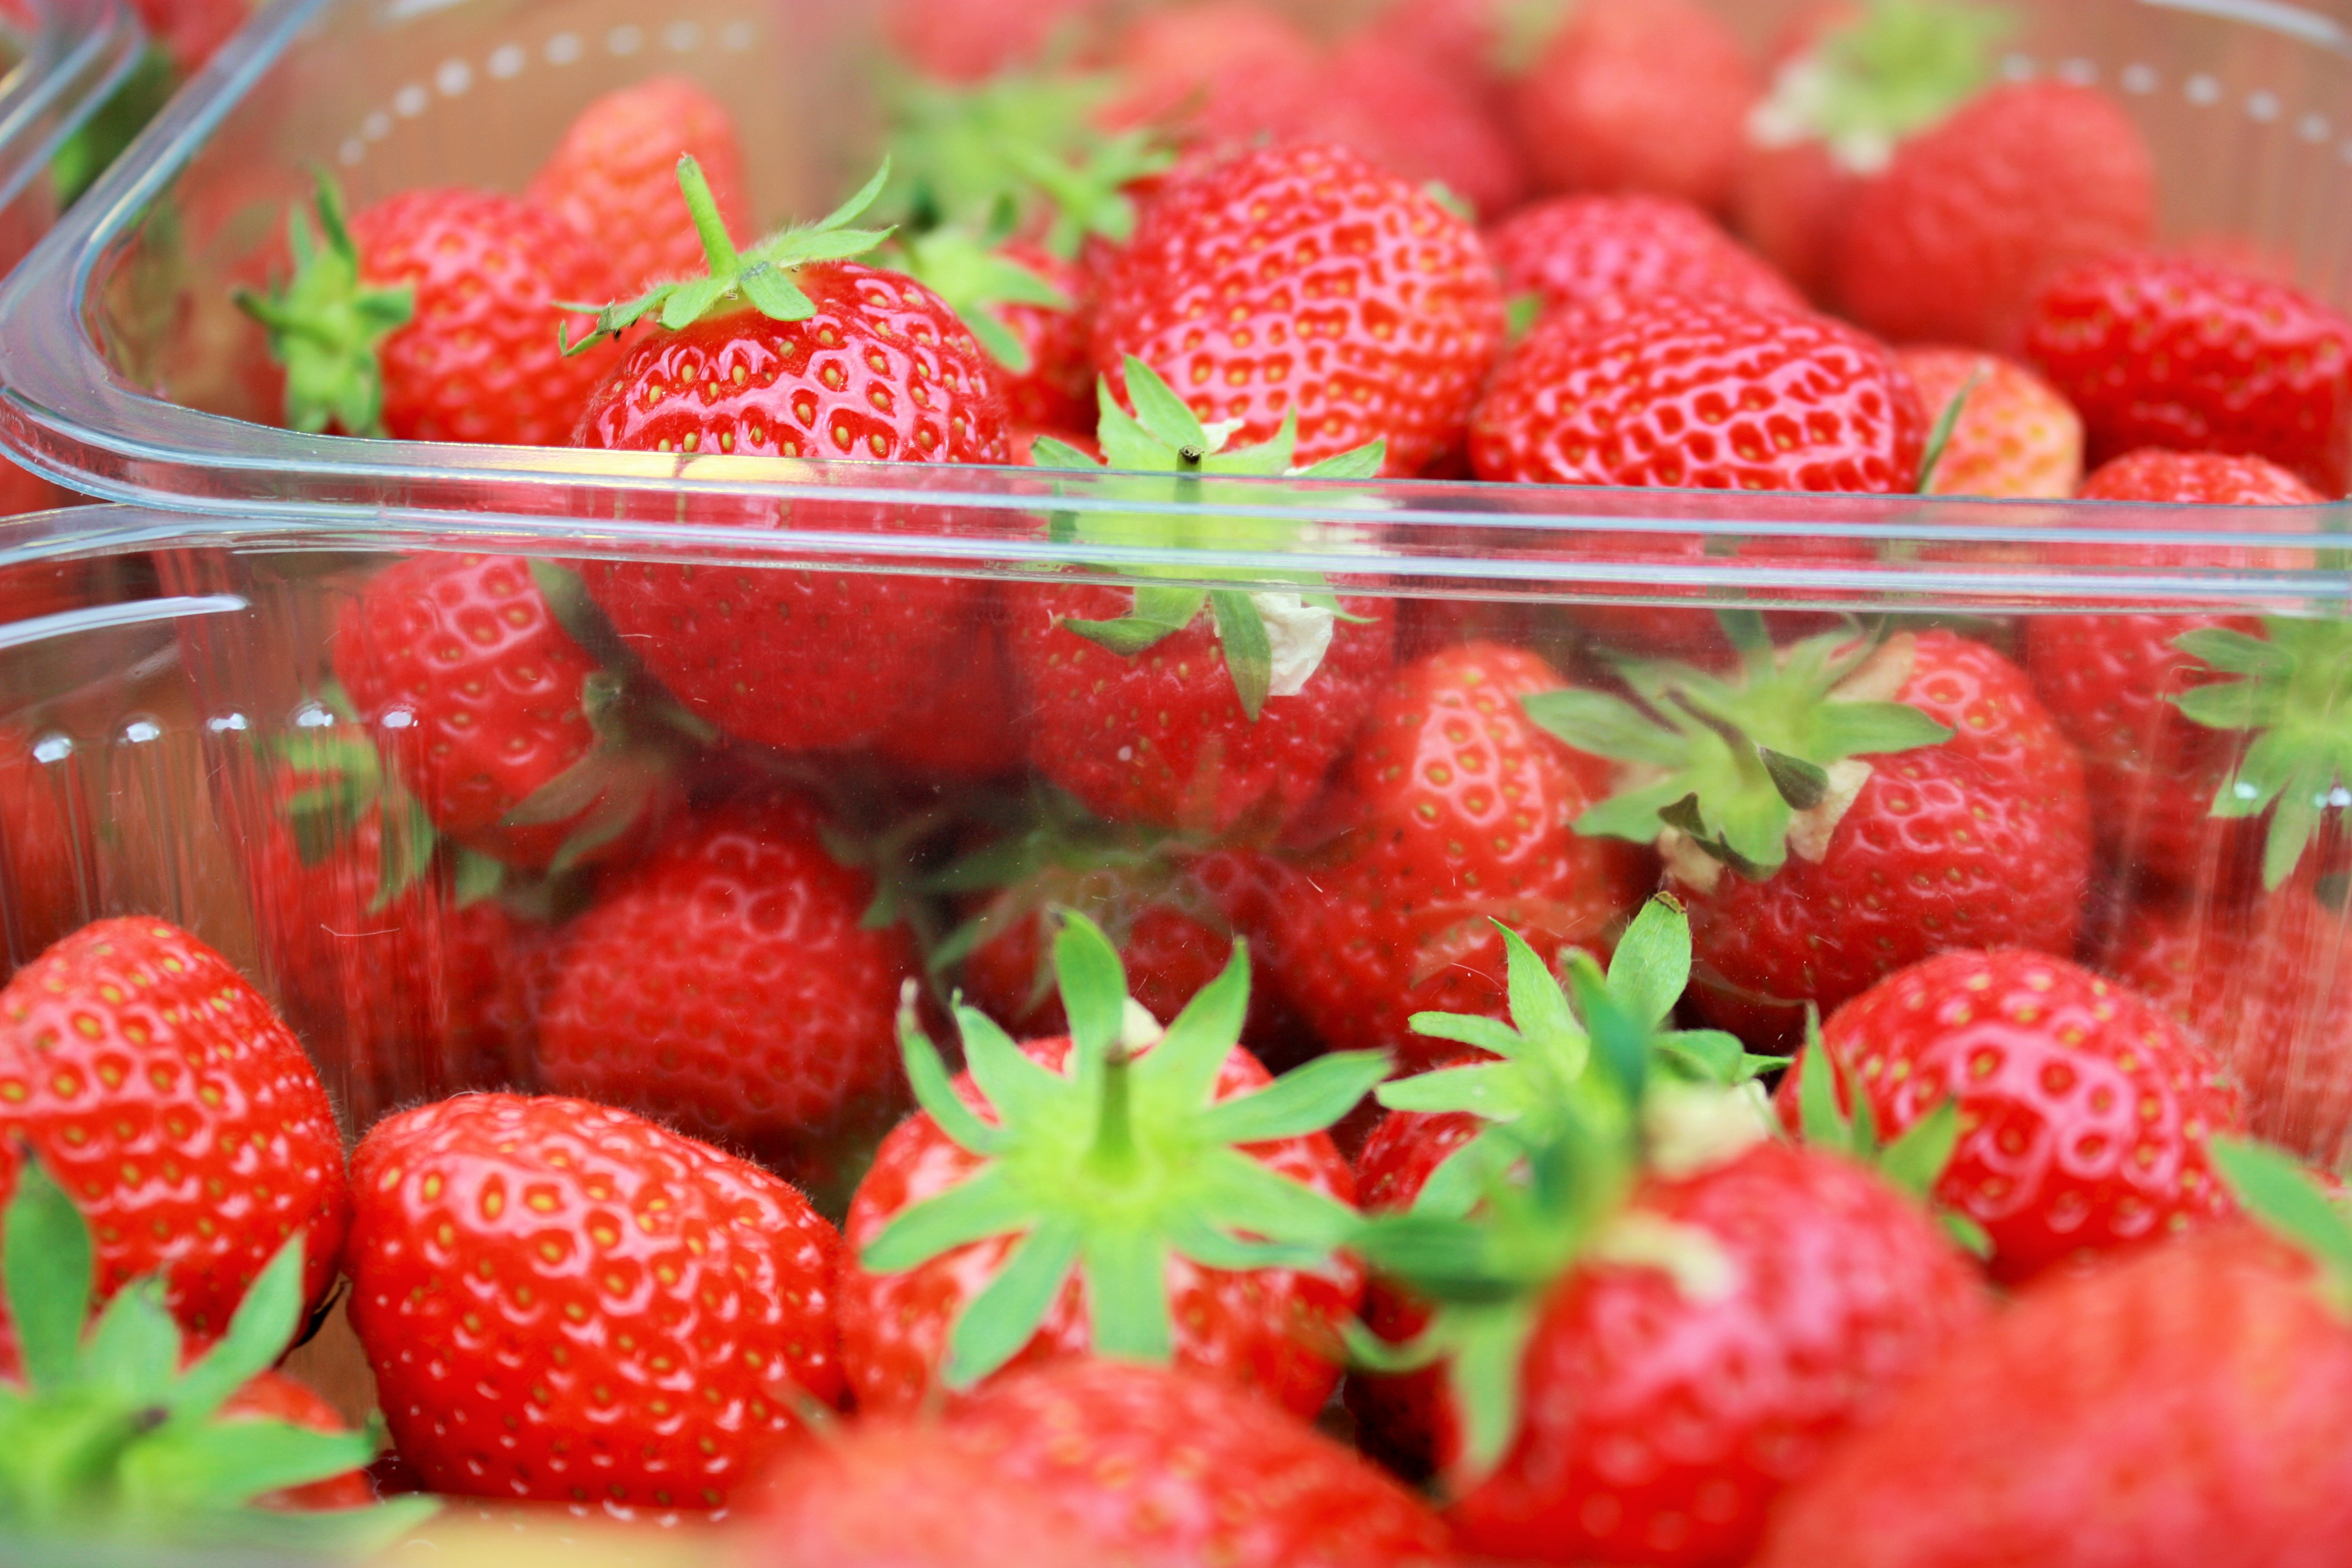 DELICIOUS LOCAL FOOD - Juicy strawberries